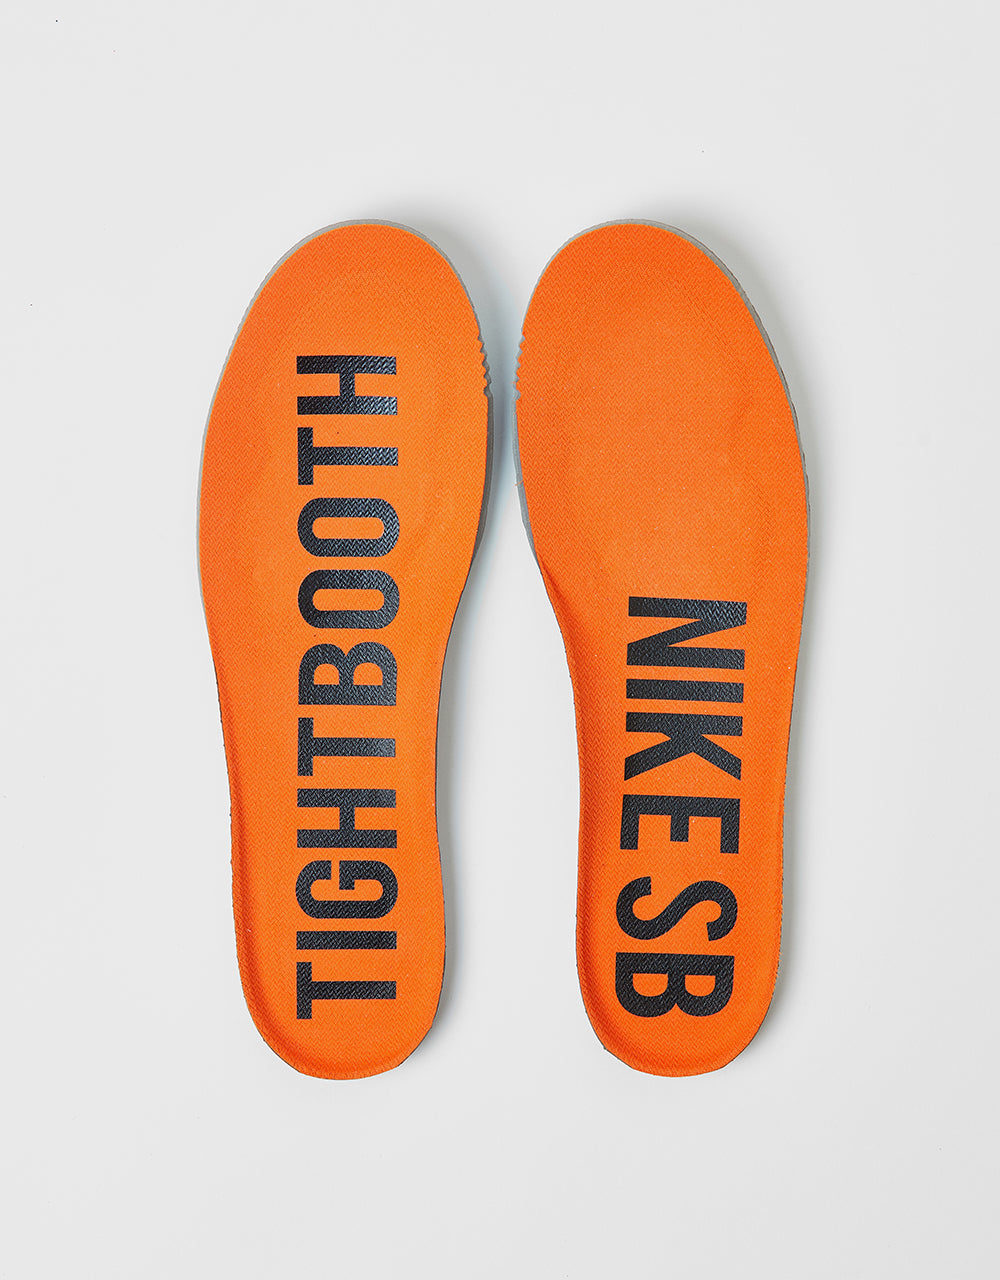 Nike SB 'Tightbooth' Dunk Low QS Skate Shoes - White/Black-Safety Orange